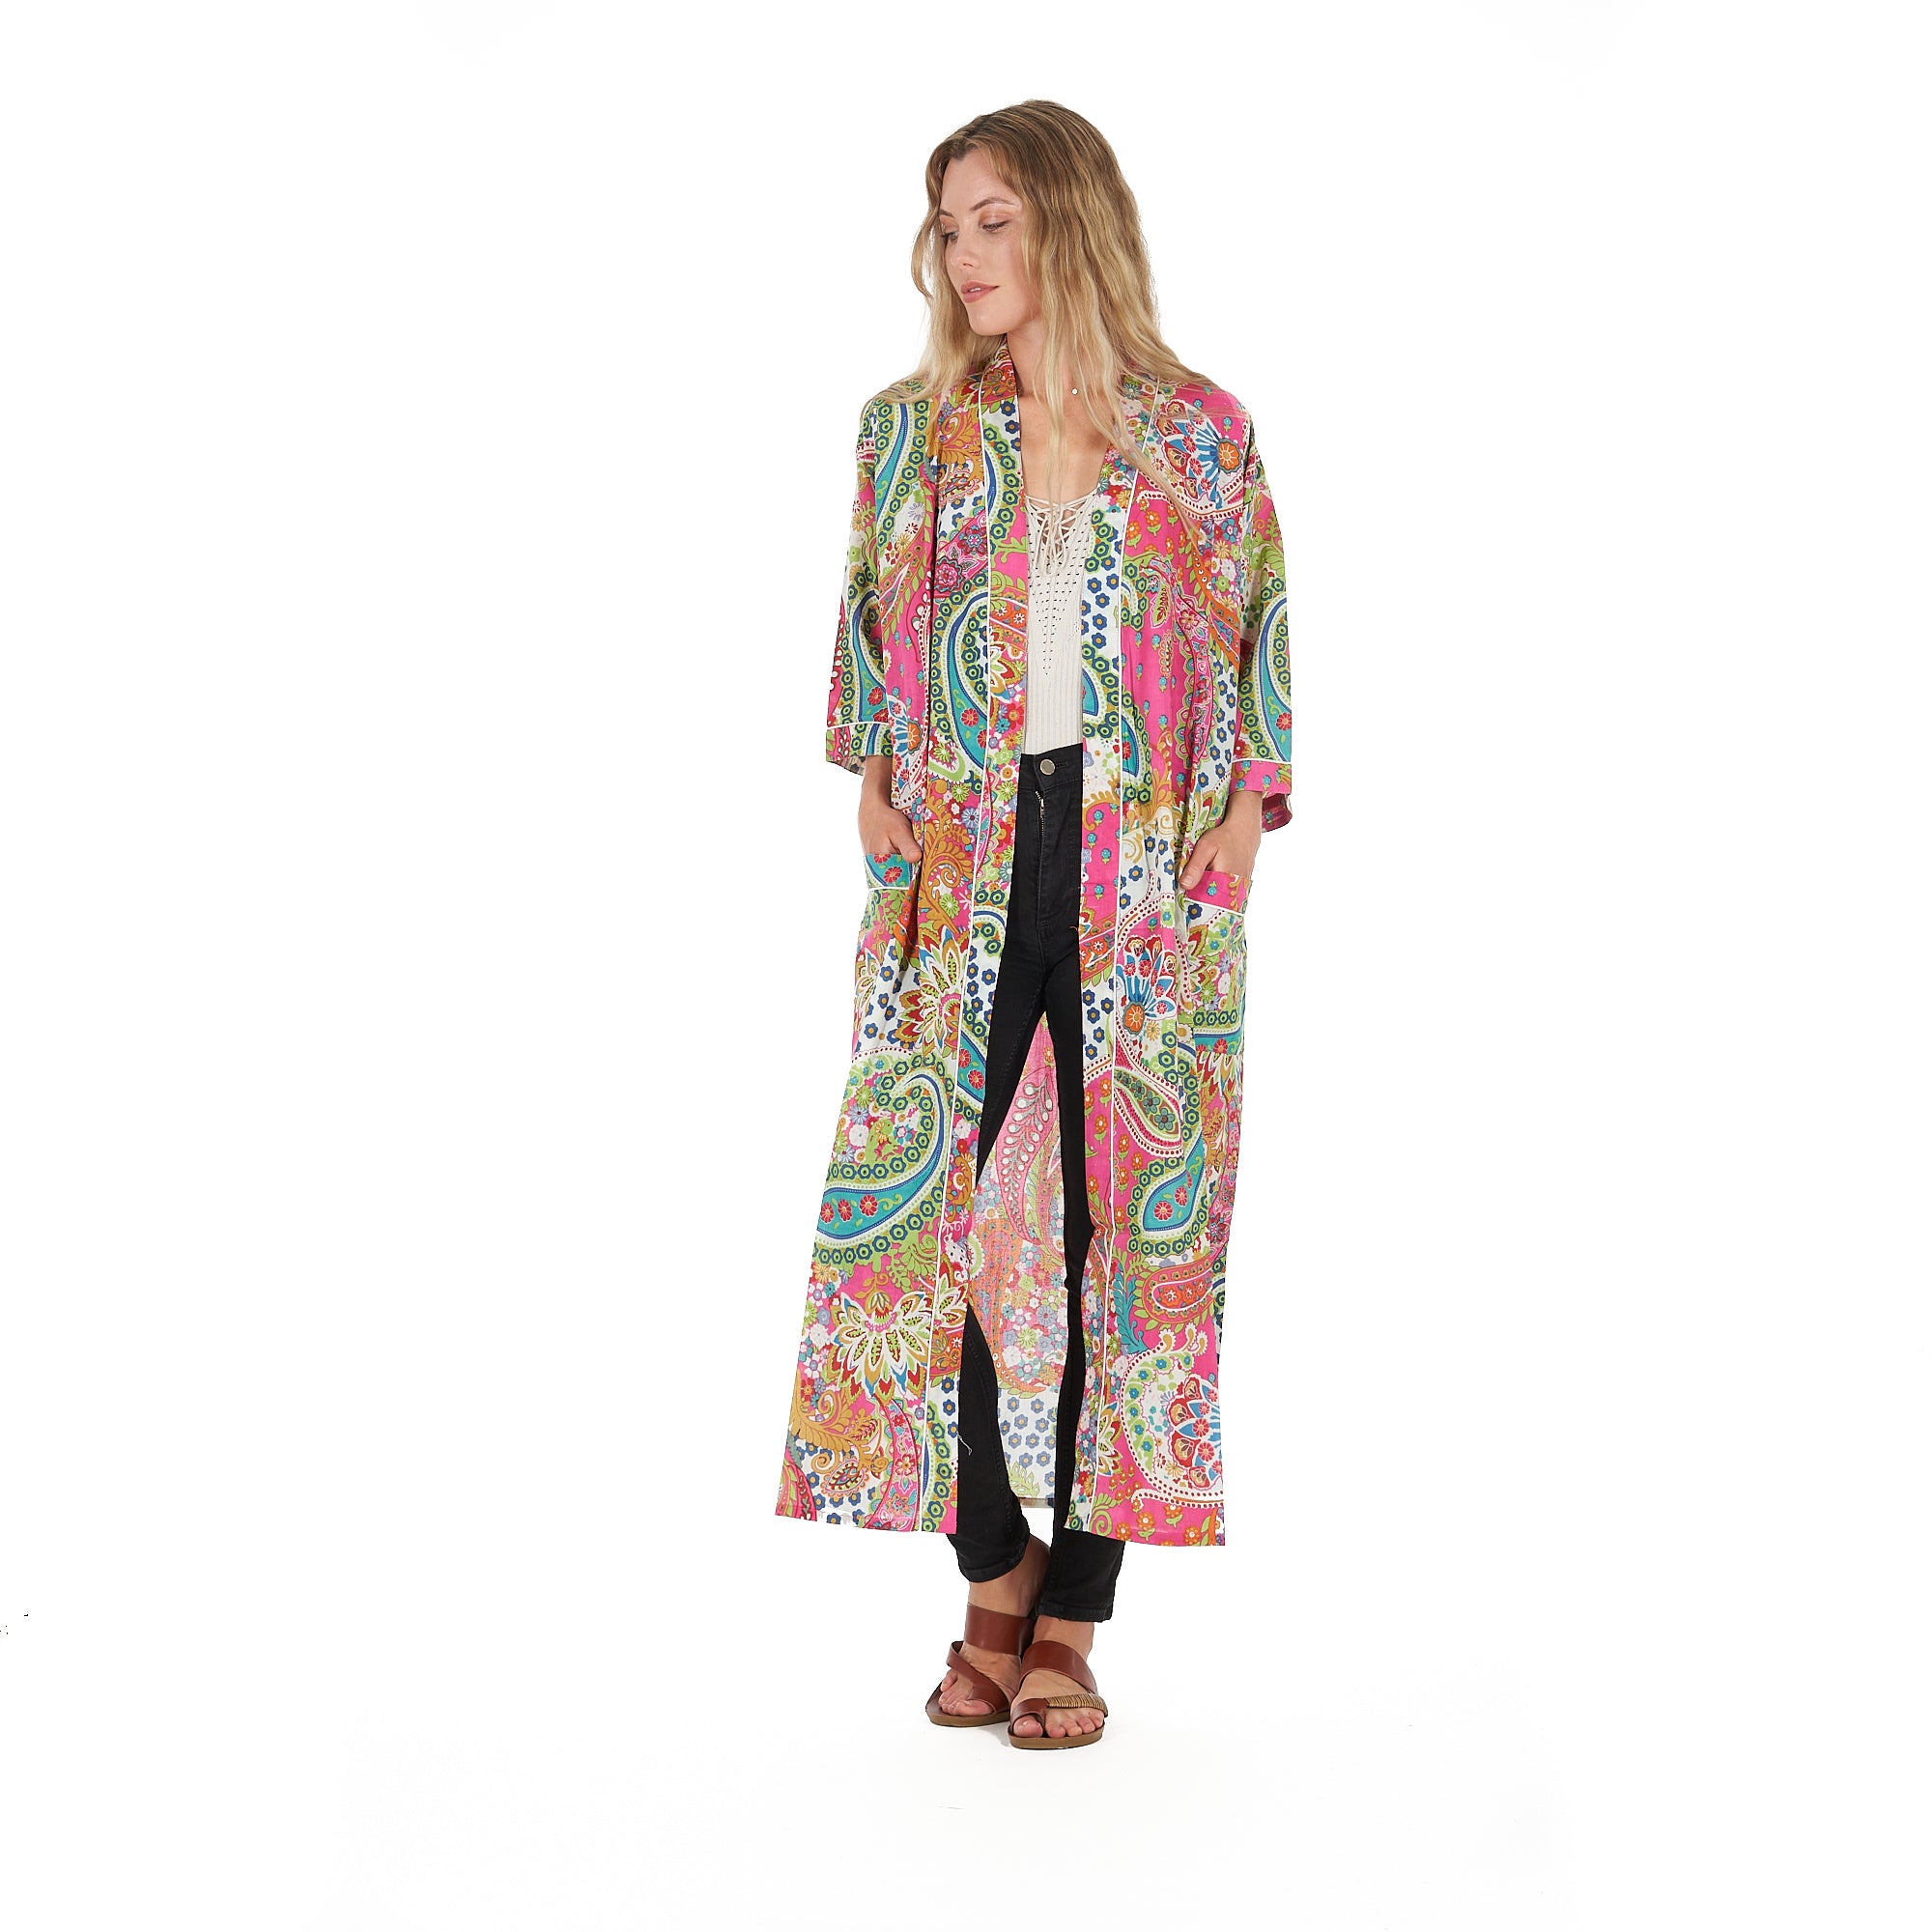 'A Splash of Florals' 100% Cotton Kimono Robe